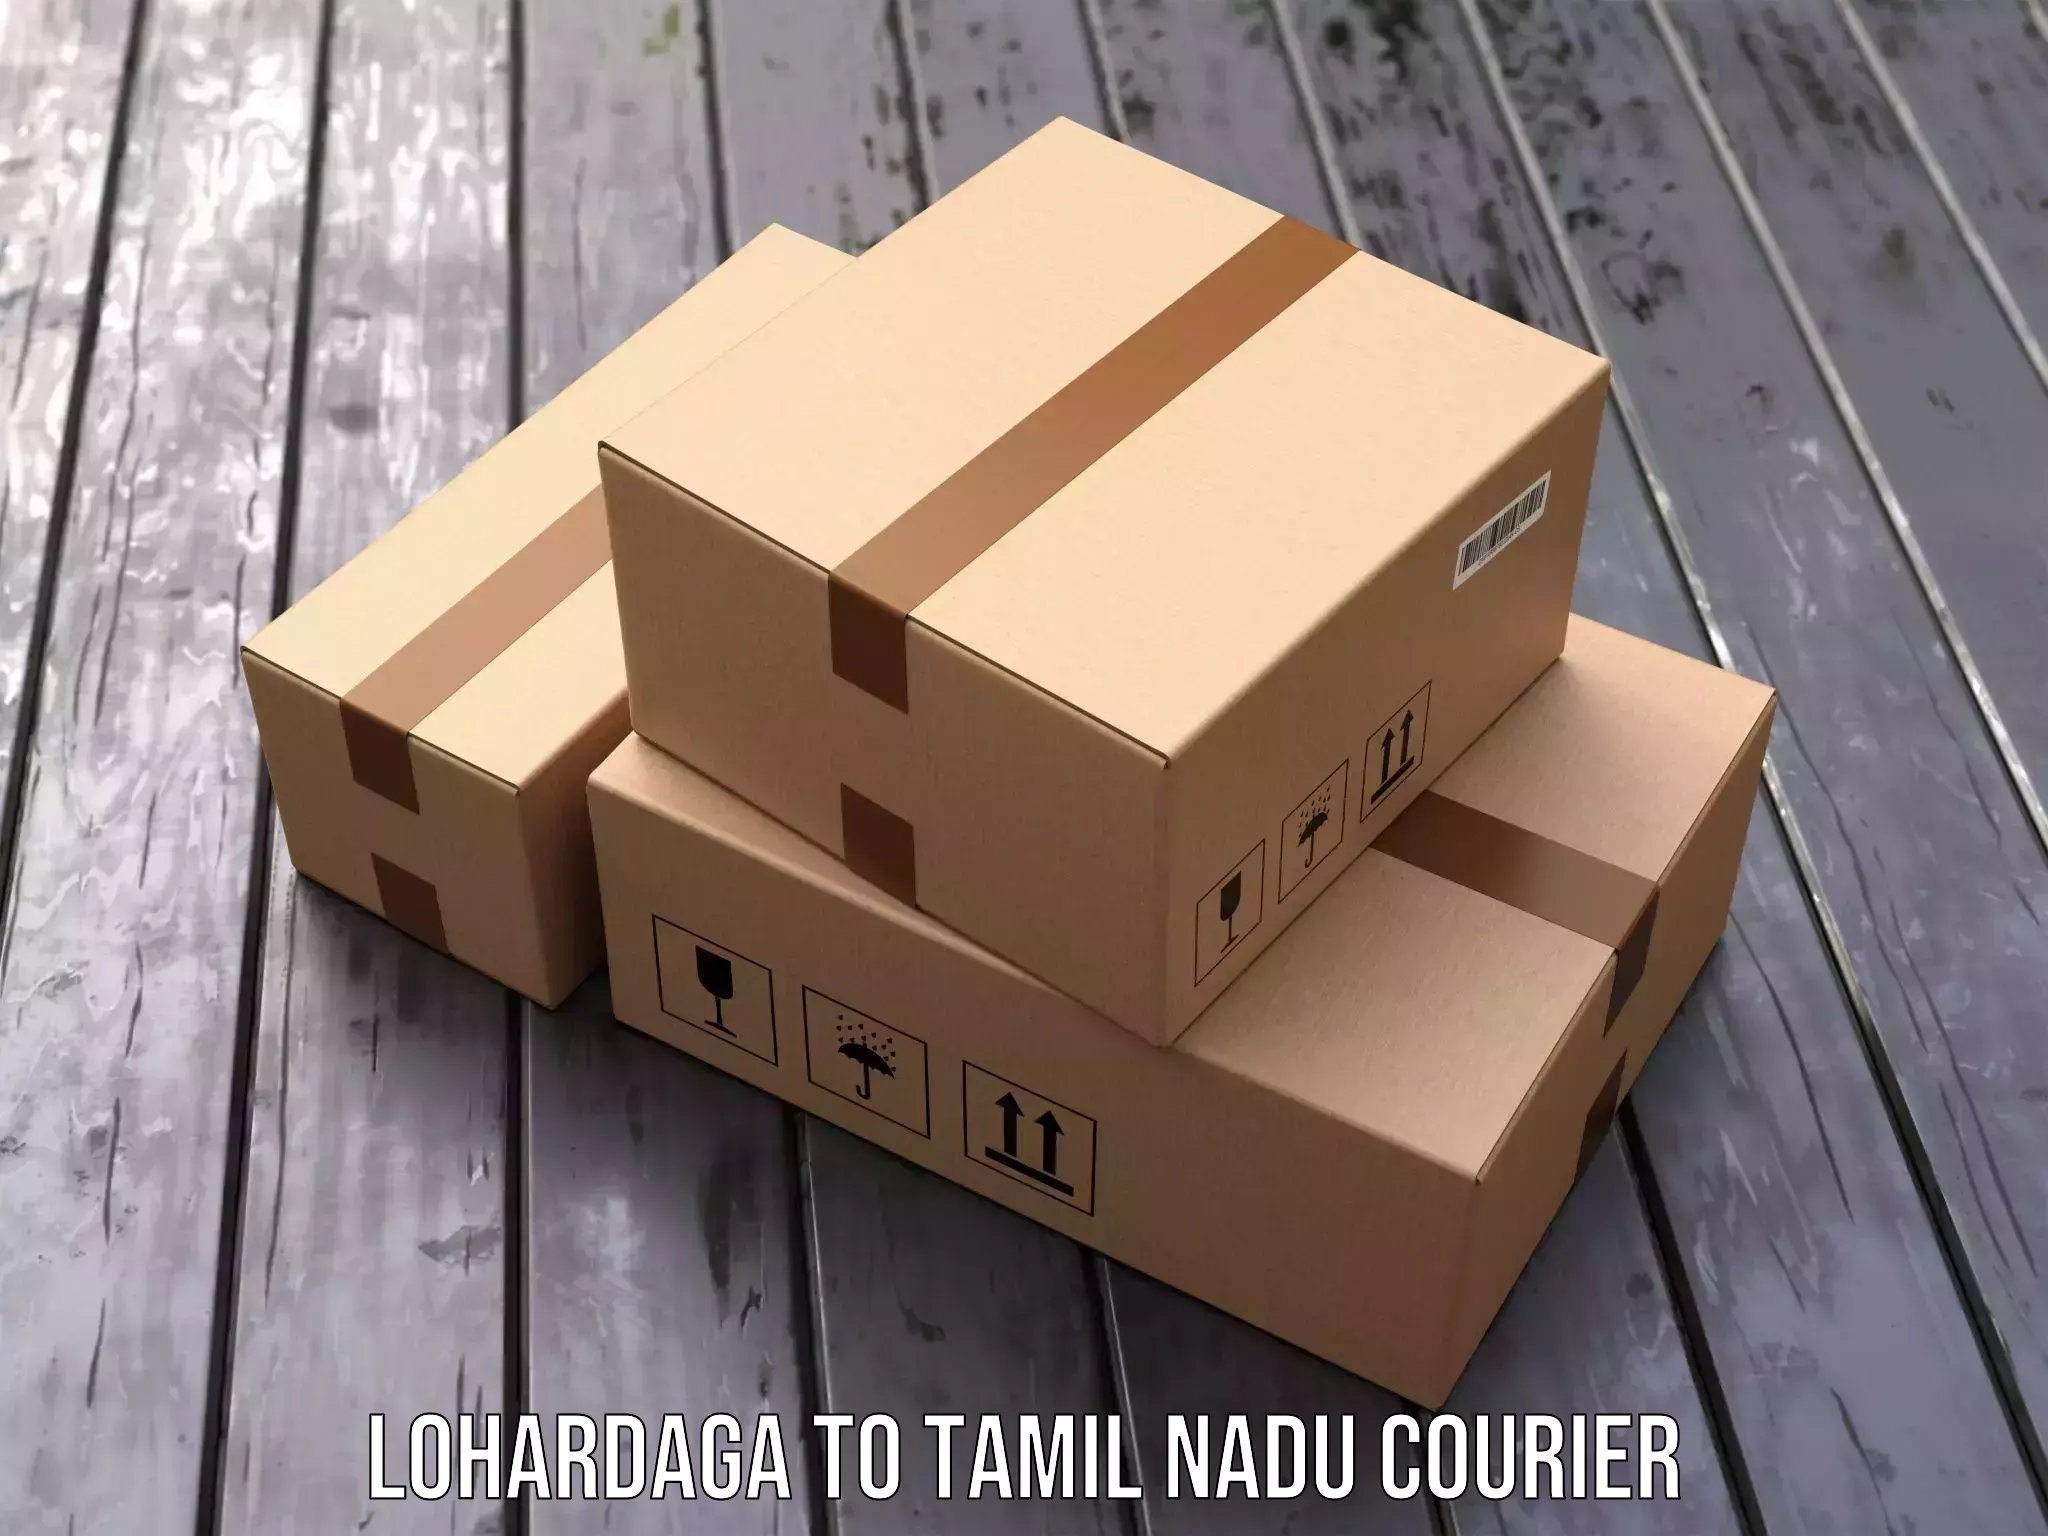 Courier service comparison Lohardaga to Vriddhachalam